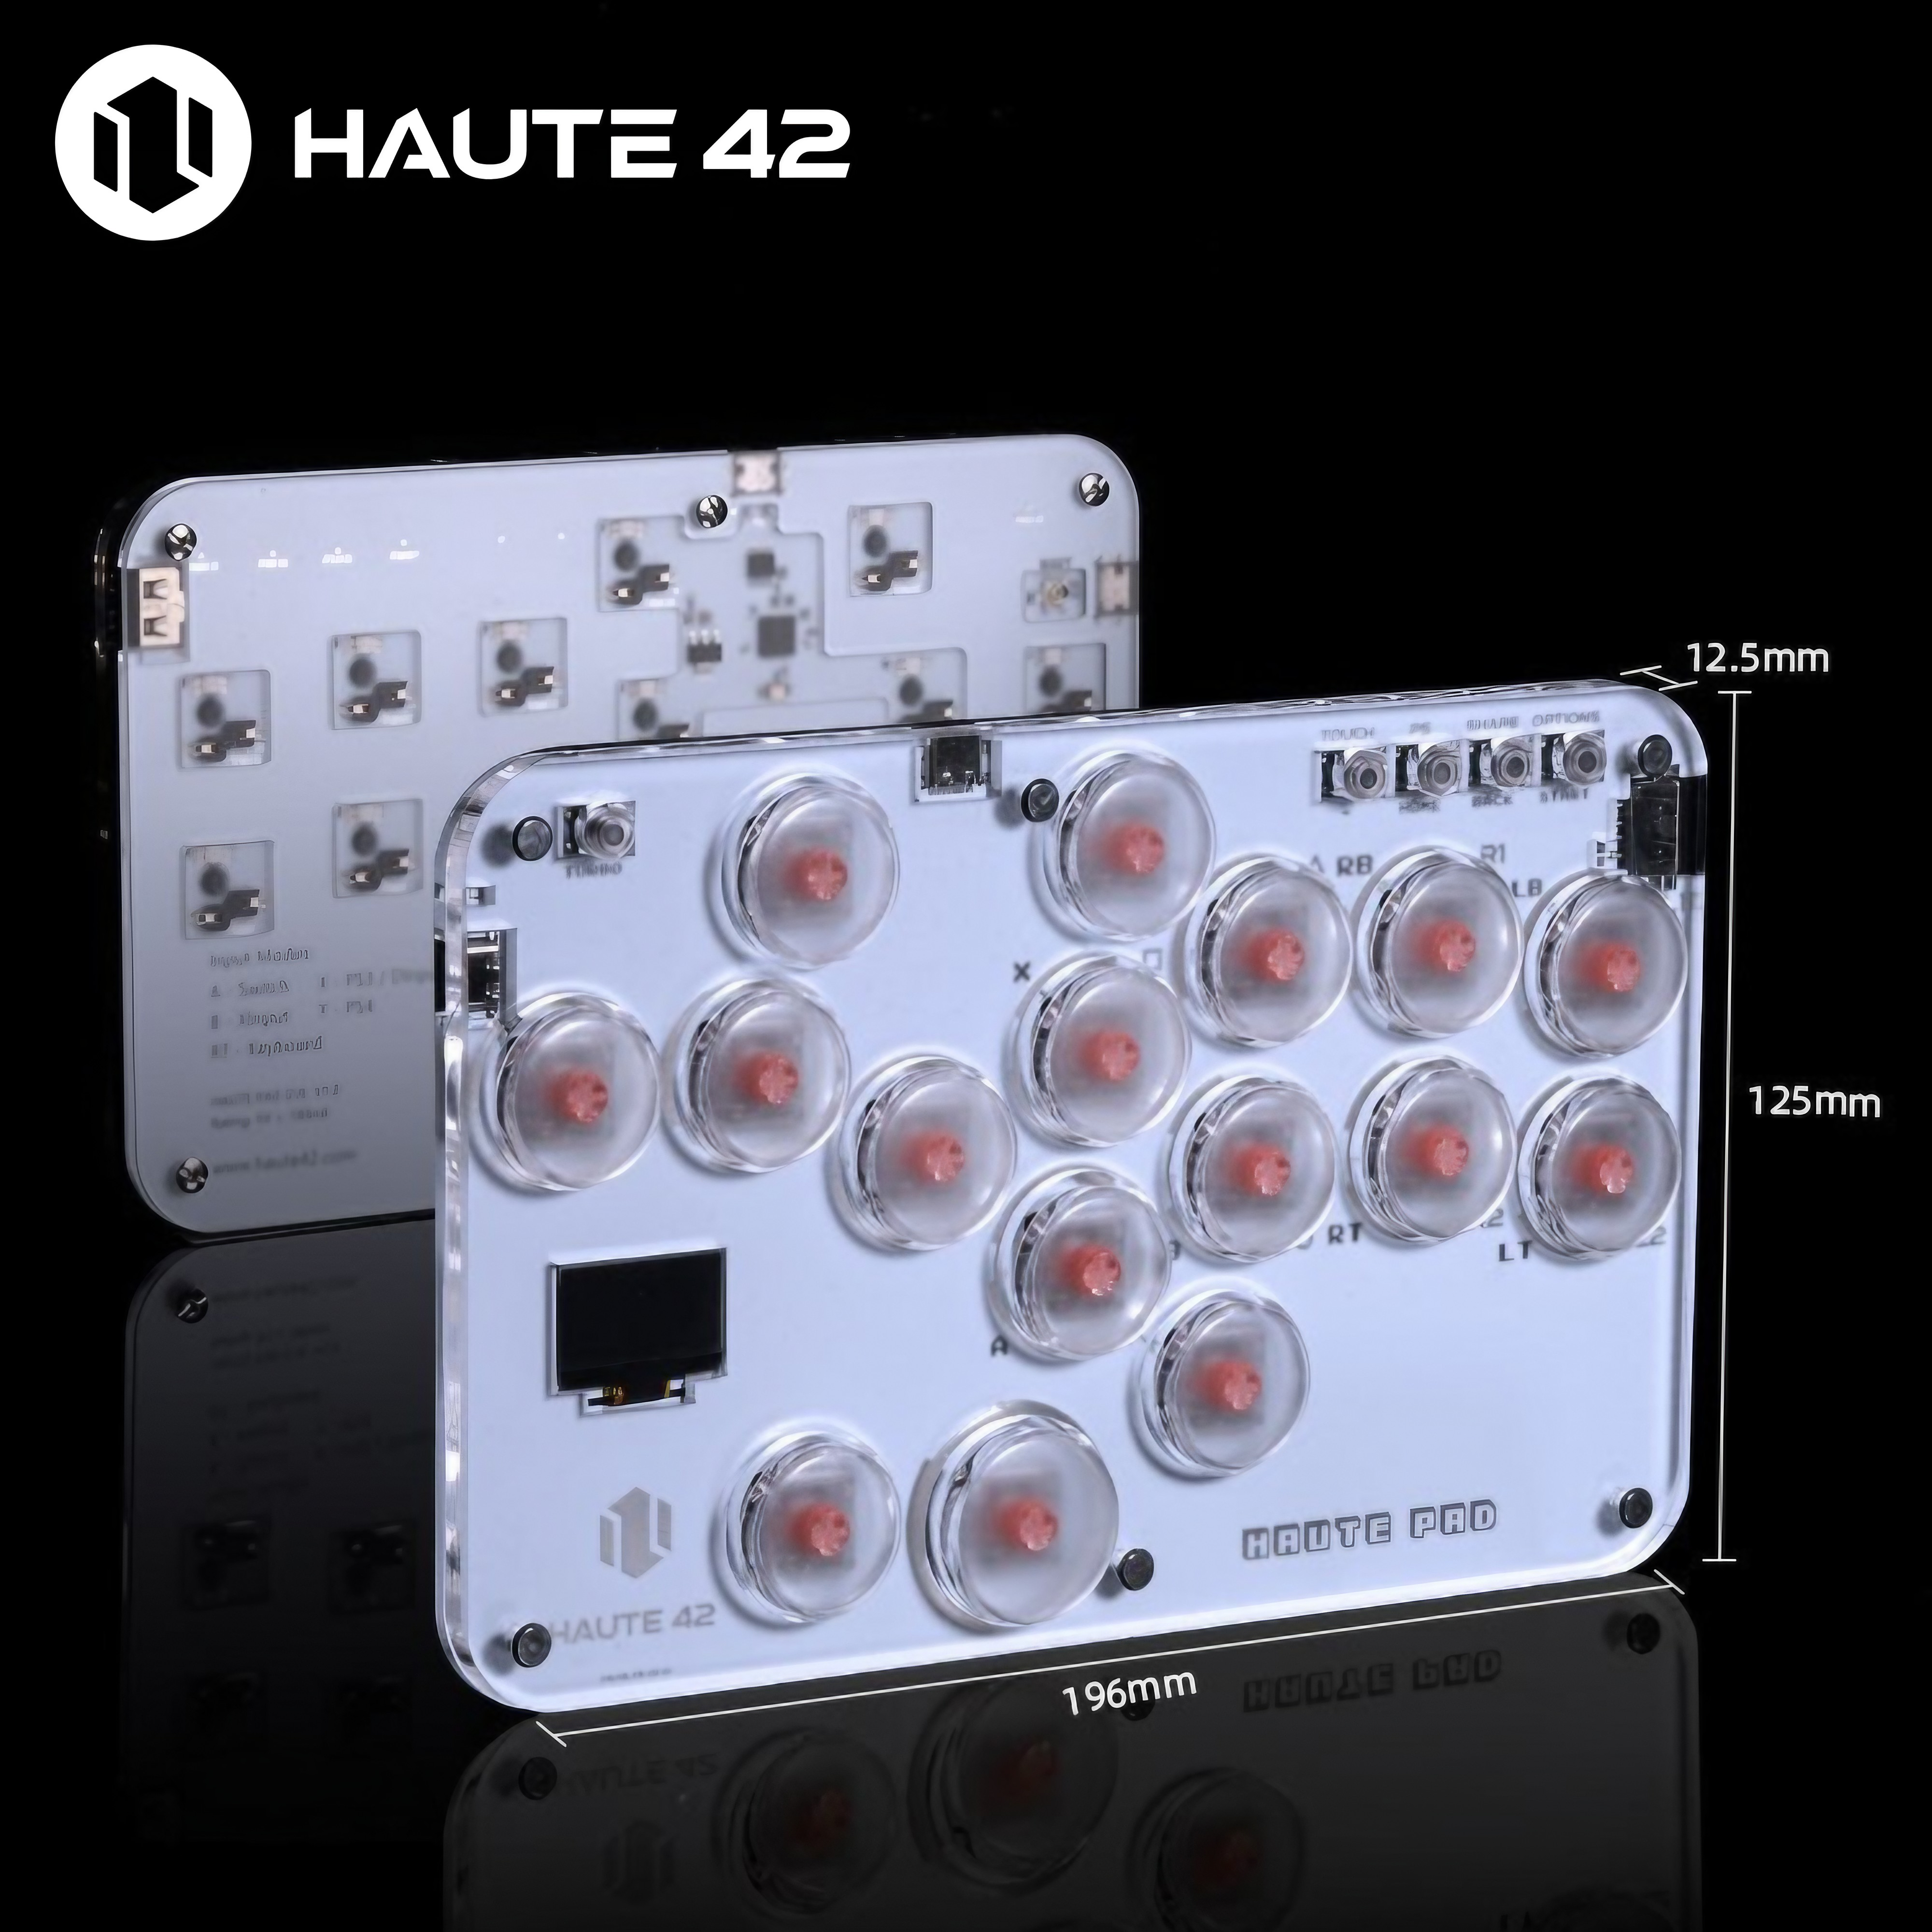 Haute42 HautePad S16 S13